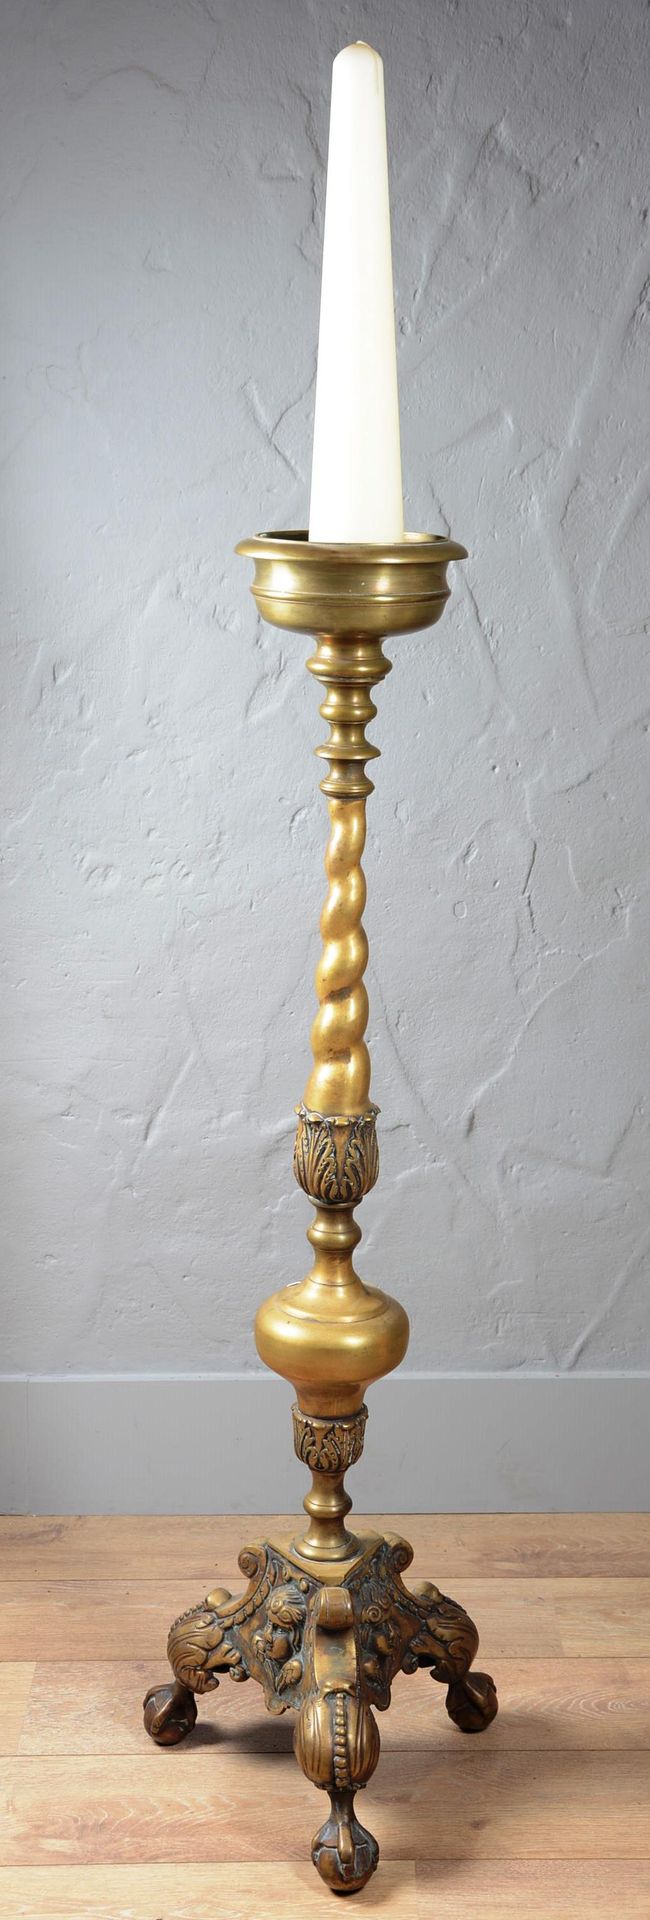 Pique cierge en bronze doré 三角形鎏金青铜烛台，有一个盆和扭曲的轴。有翼天使的头和脚在世界地图上以鹰爪结束。

法兰德斯，17世纪。&hellip;